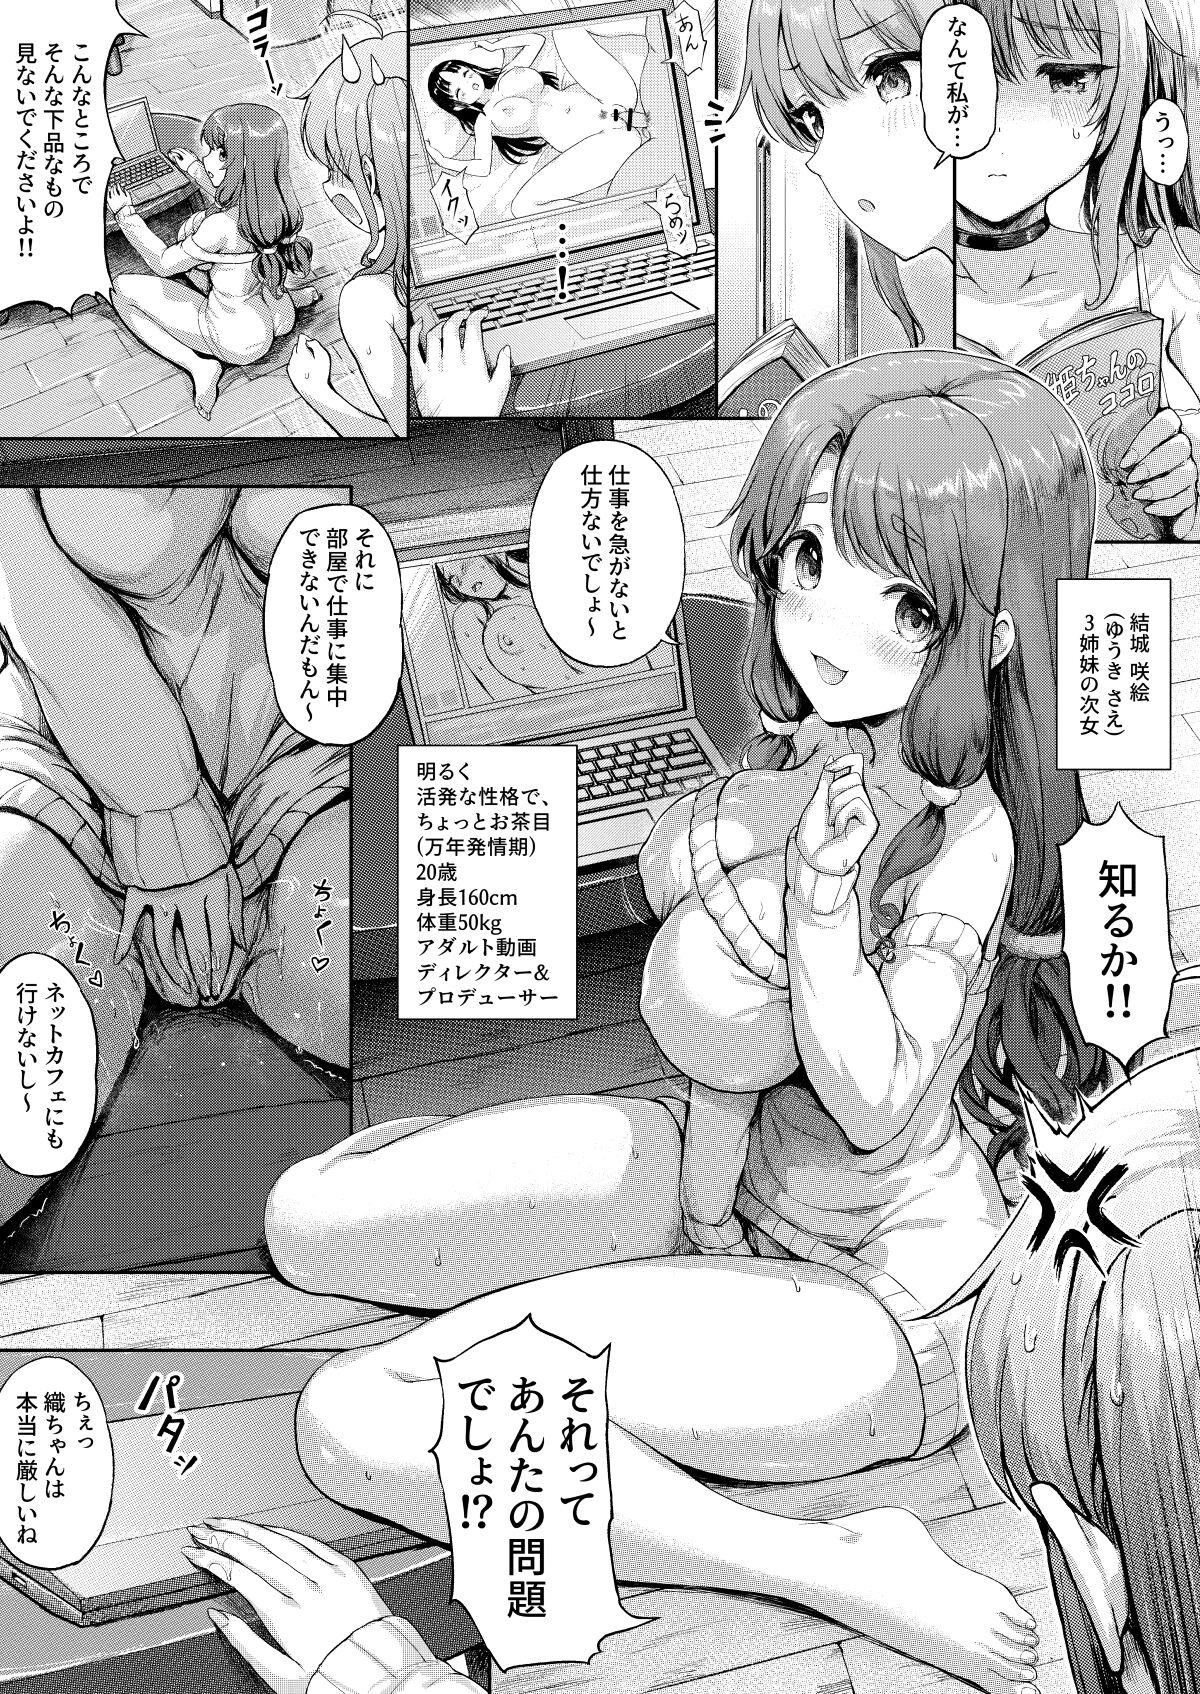 Outside Sanshimai Manga ep1 p1-9 - Original Latex - Page 11